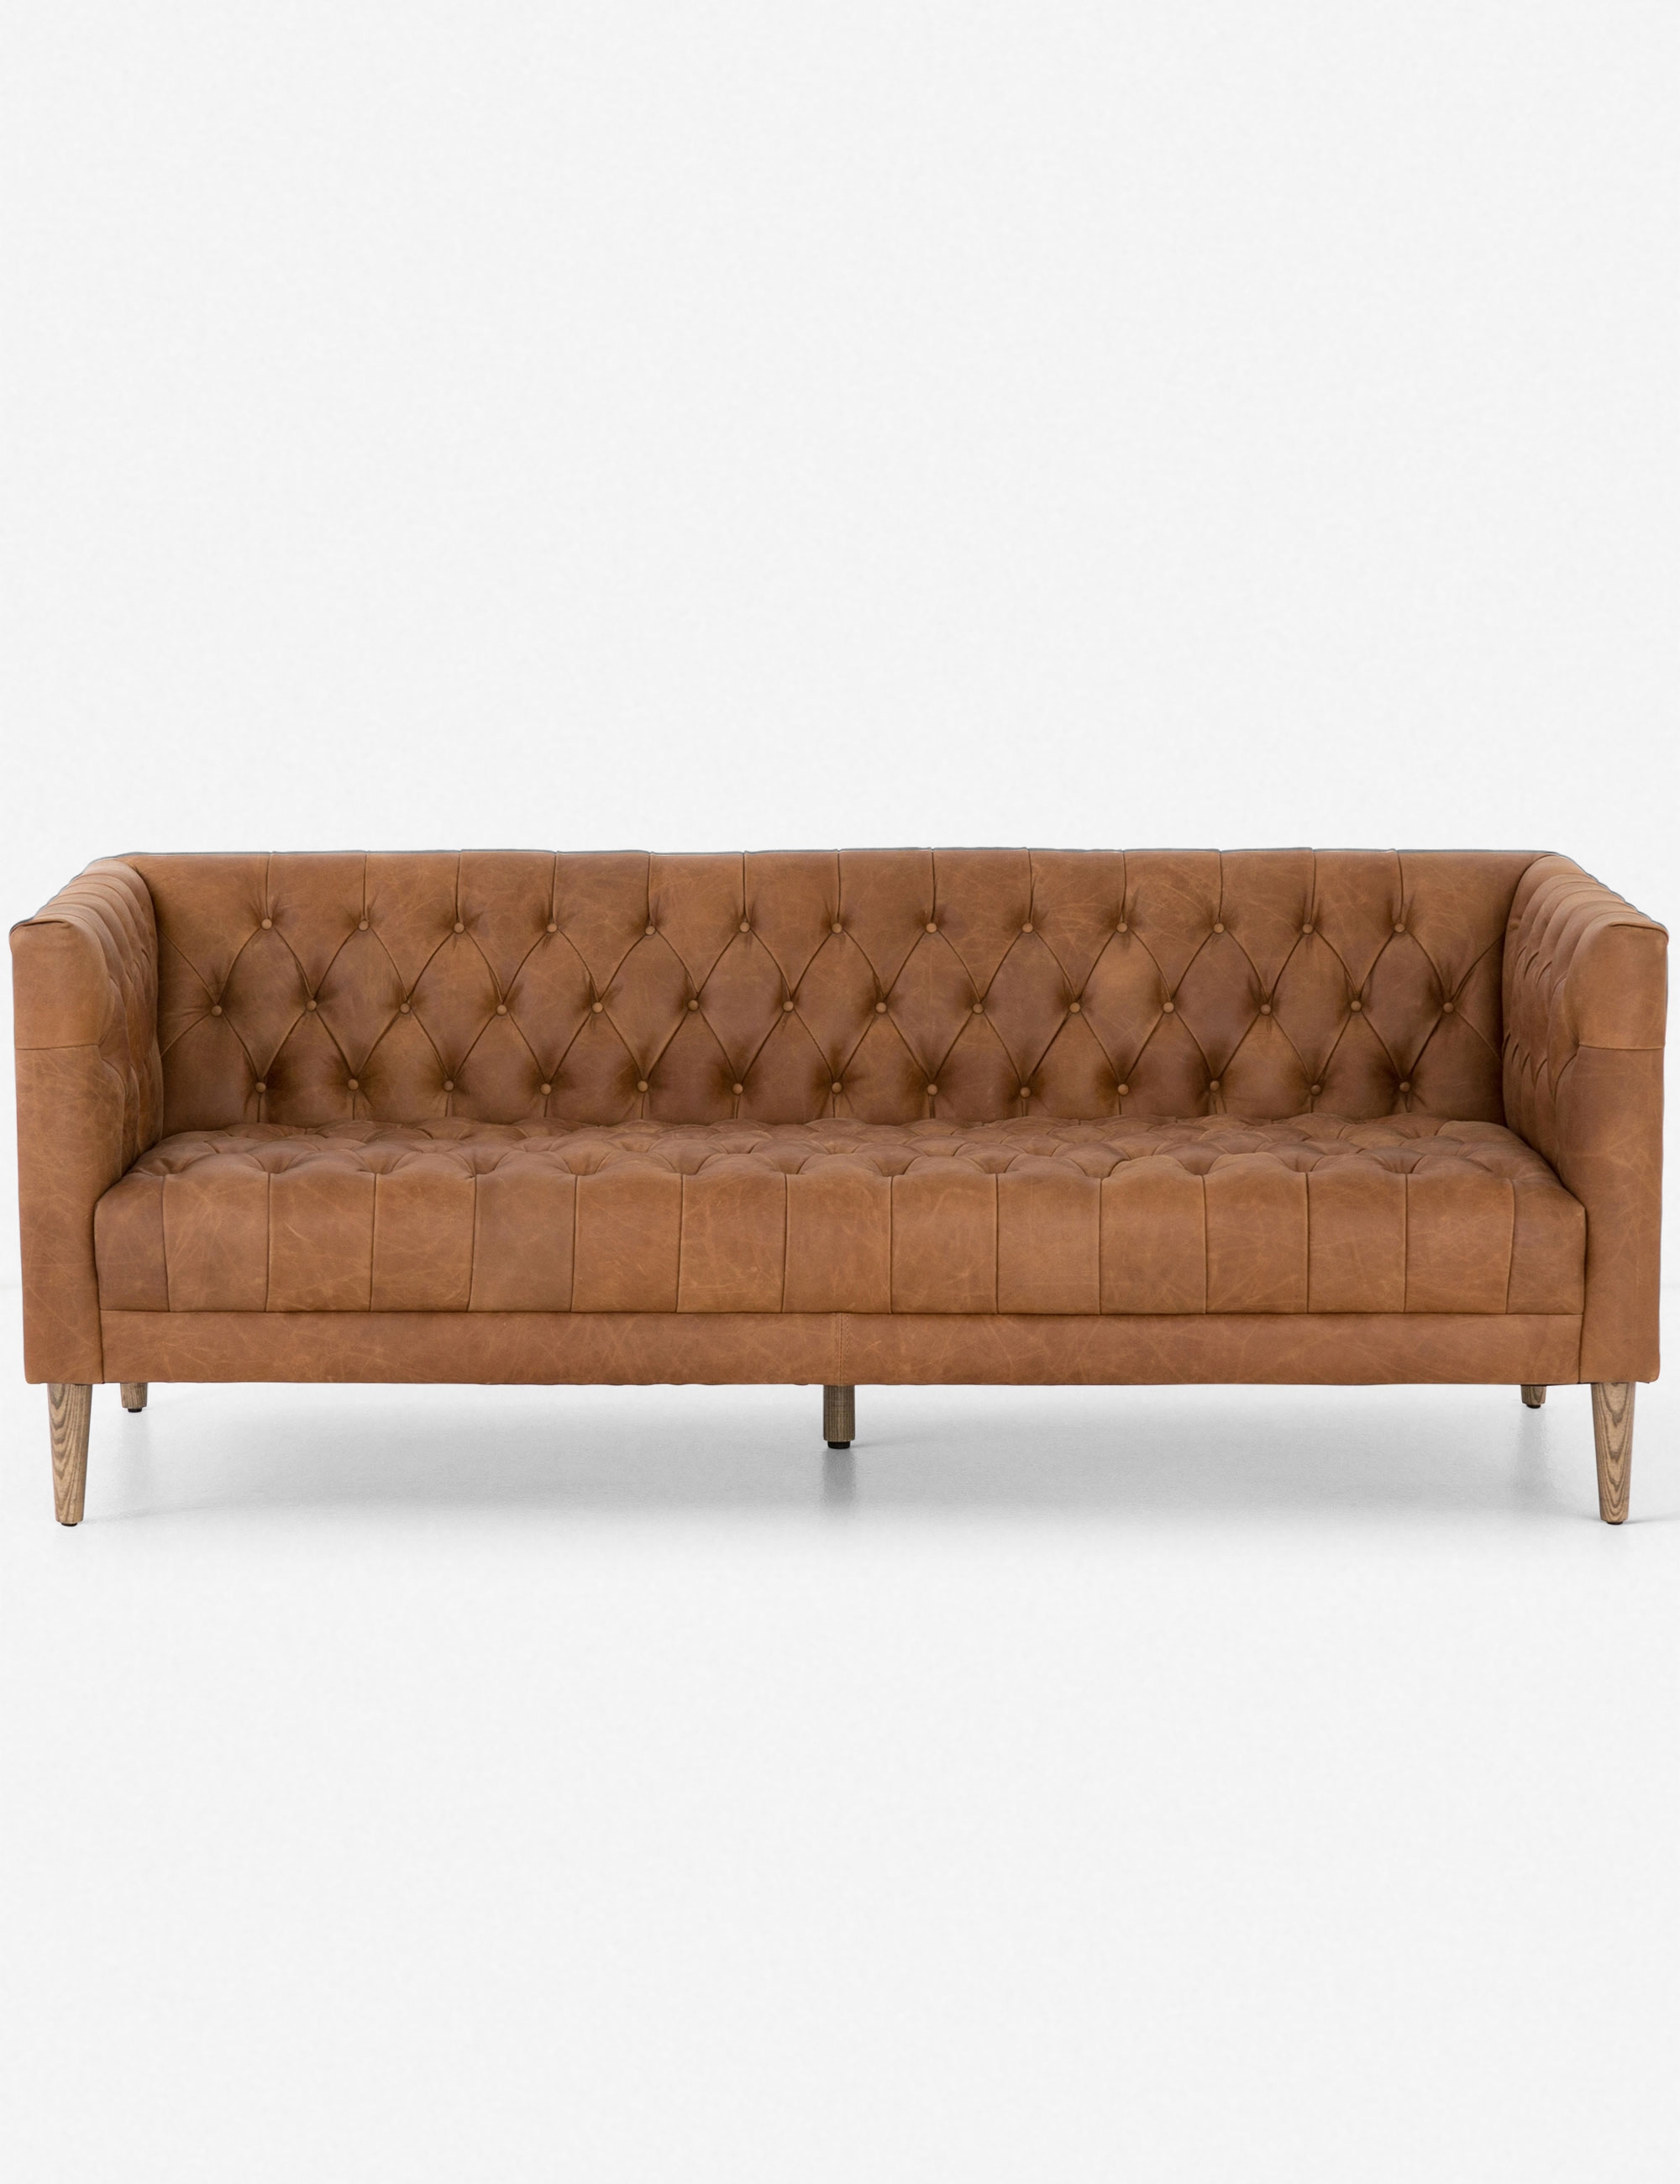 Breanne Leather Sofa - Image 0